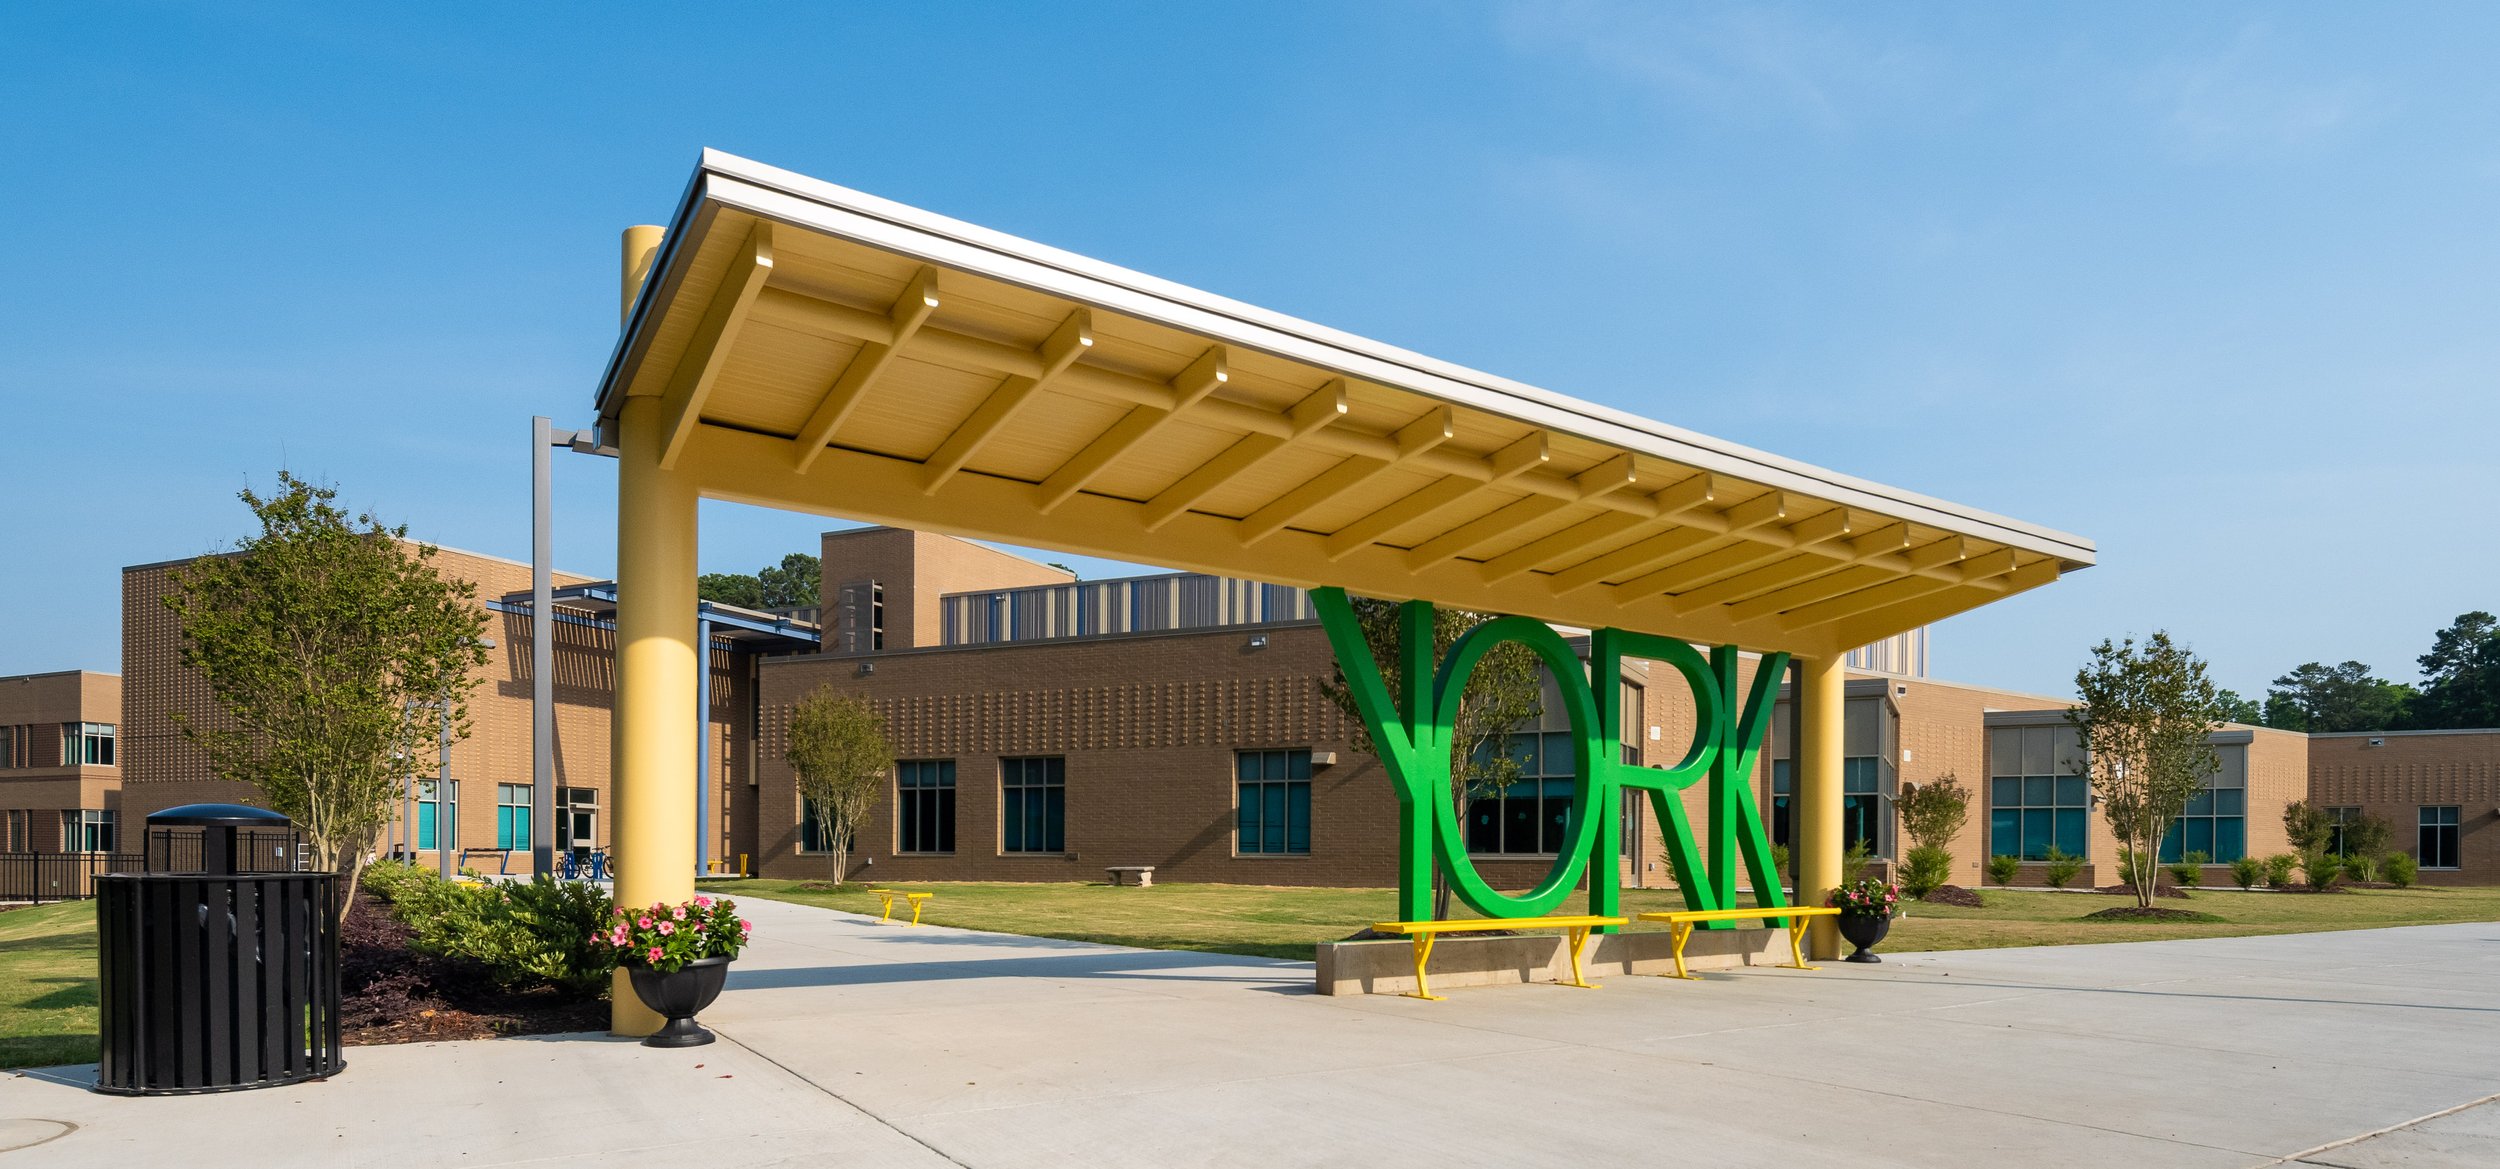 York Elementary School